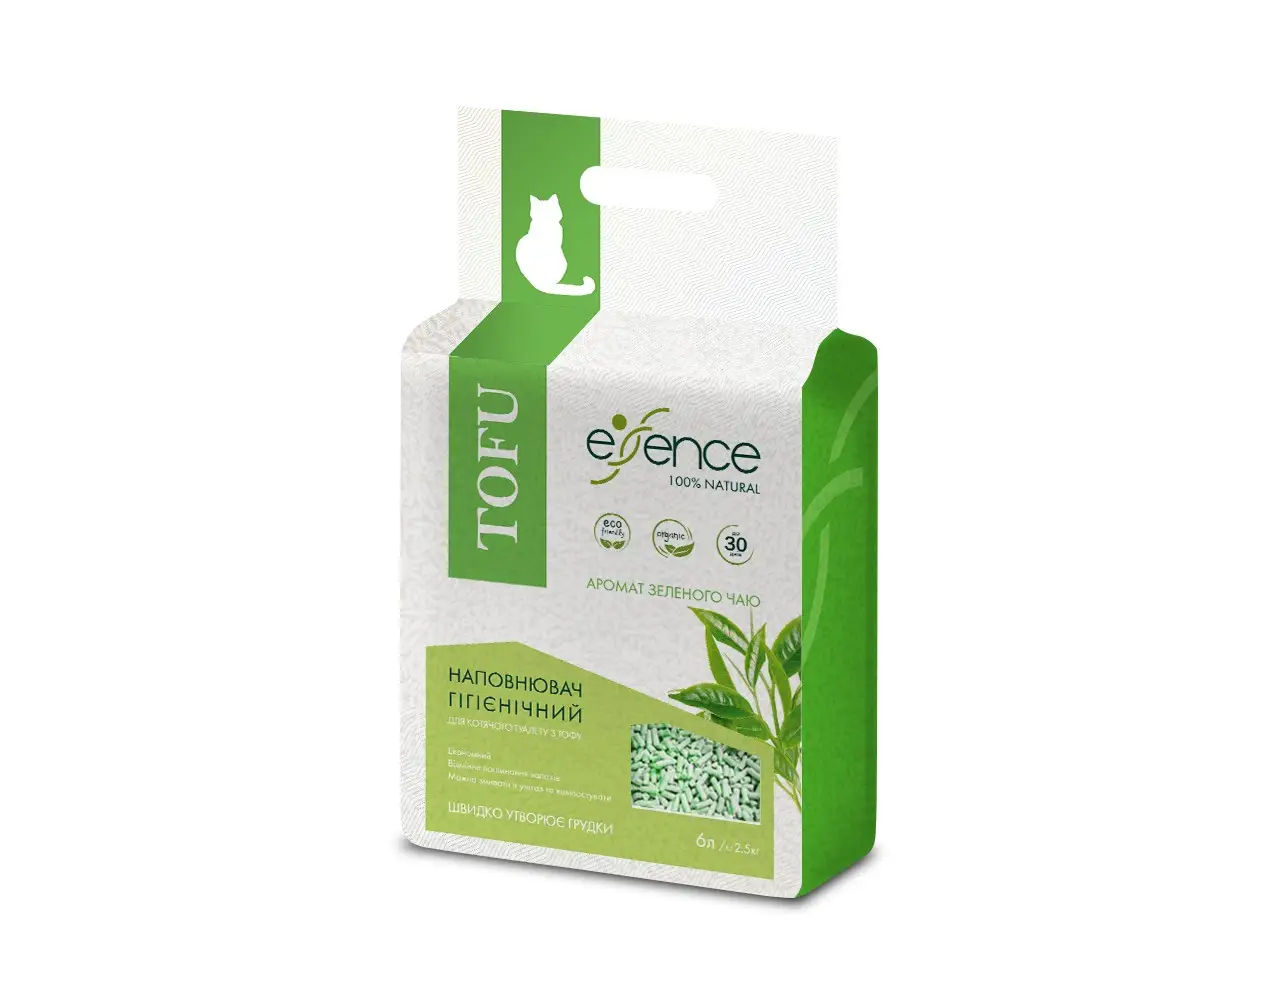 Essence Tofu наповнювач для котячого туалету 6 л (зелений чай)2